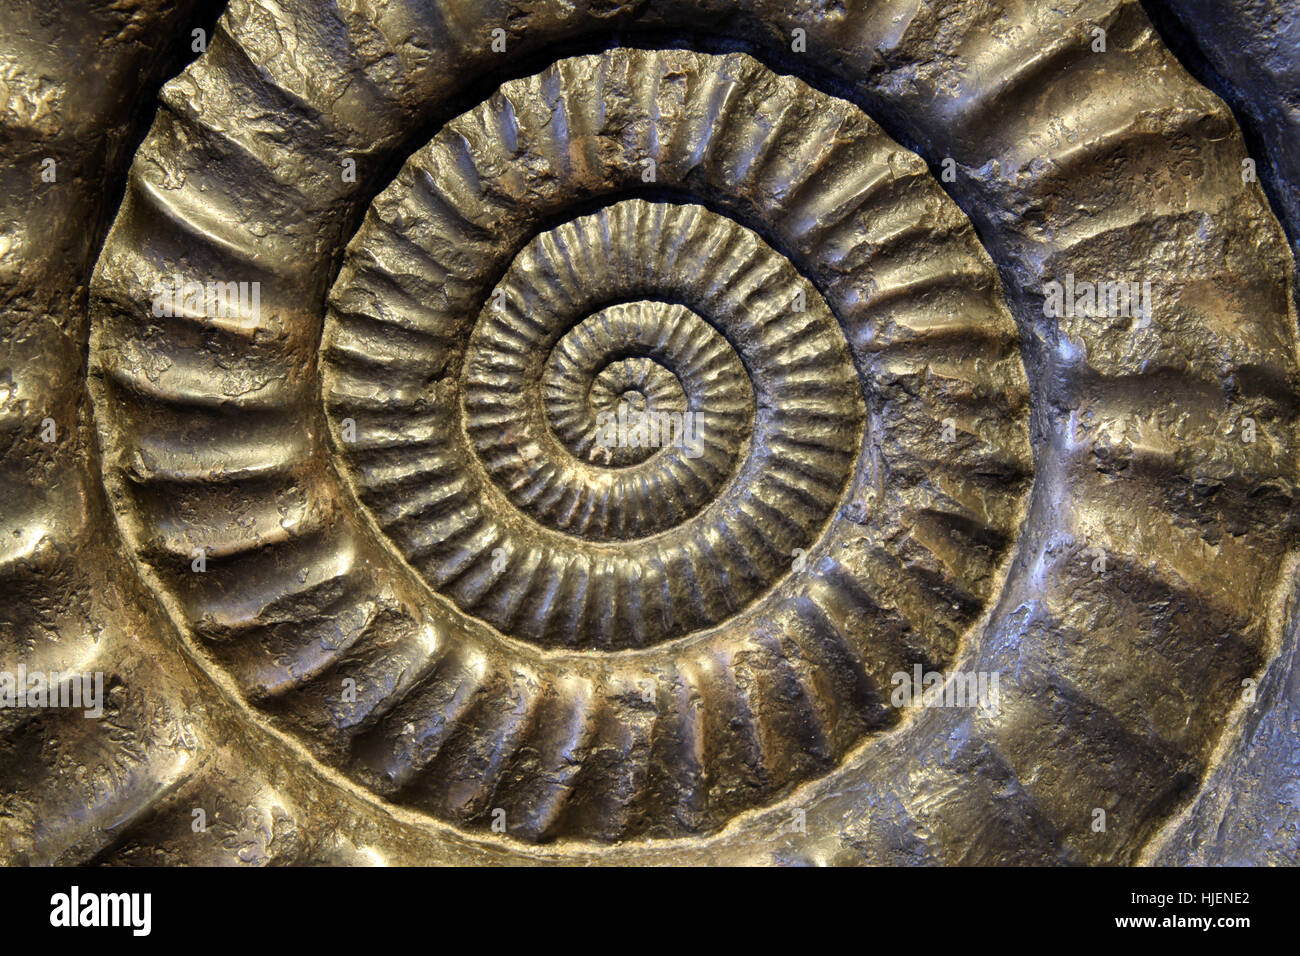 snail, stone age, fossilization, fossil, archeology, jurassic, prepatation, Stock Photo